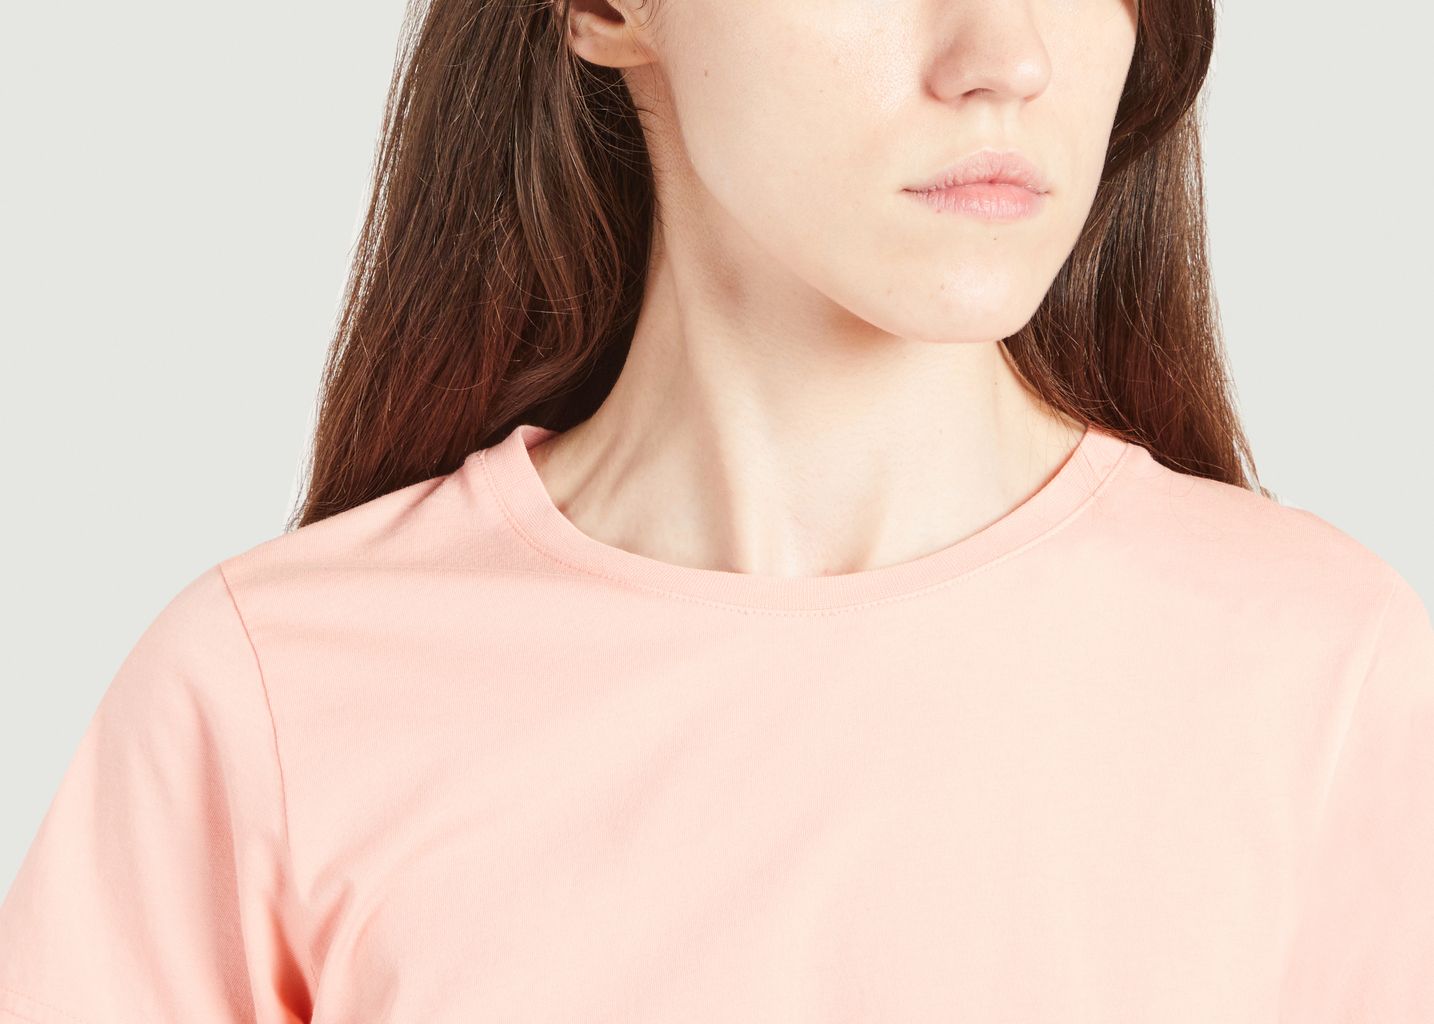 Tee Shirt Coton Bio - Colorful Standard